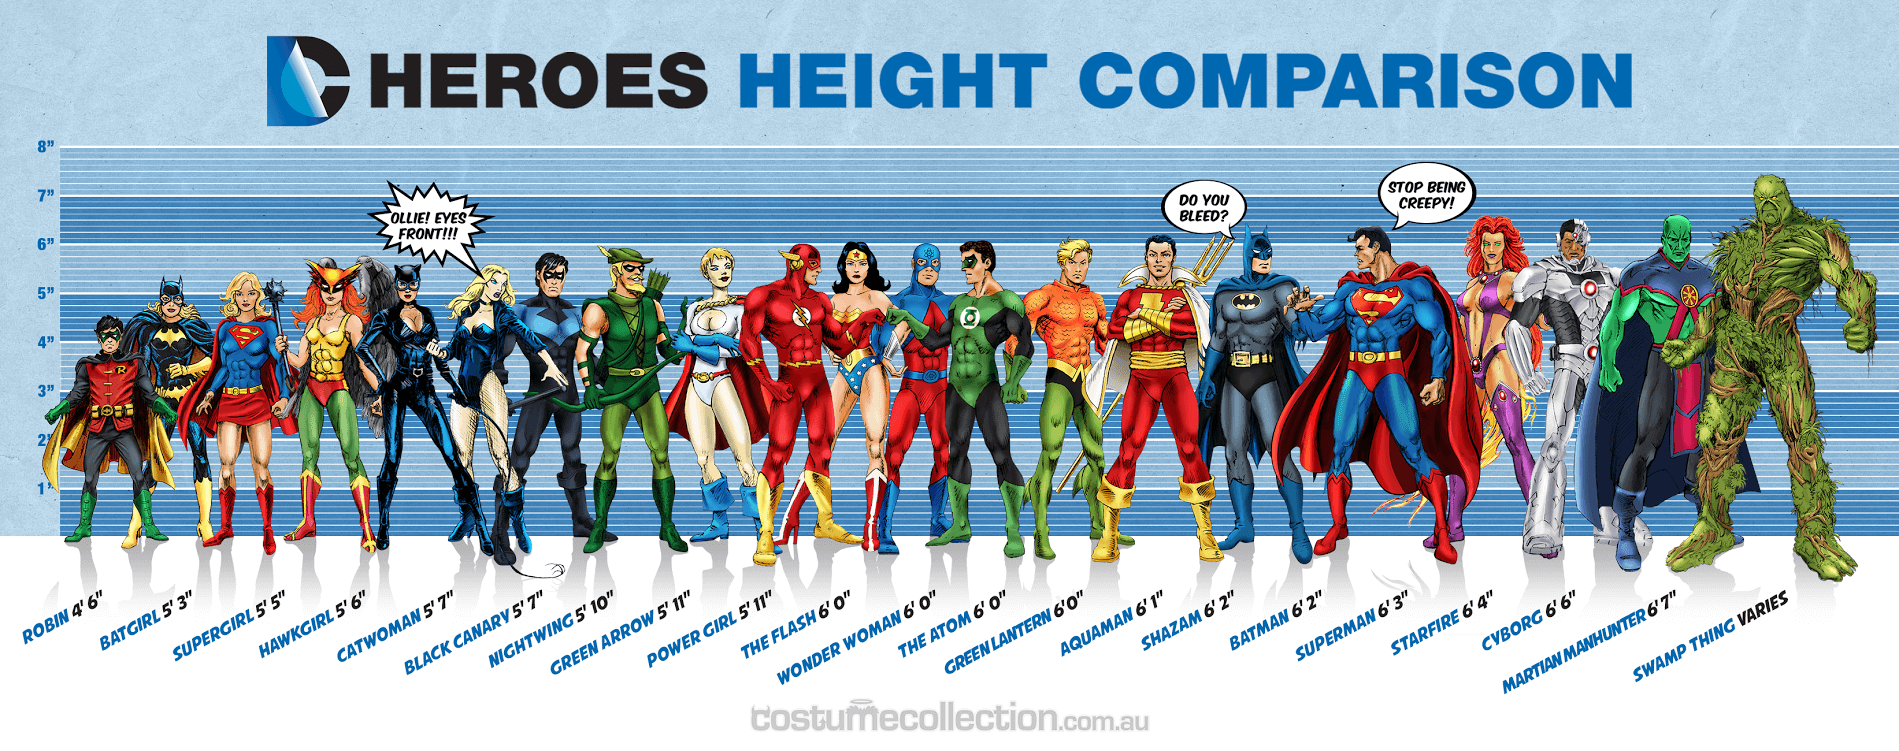 superhero-height-comparison-chart-infographic